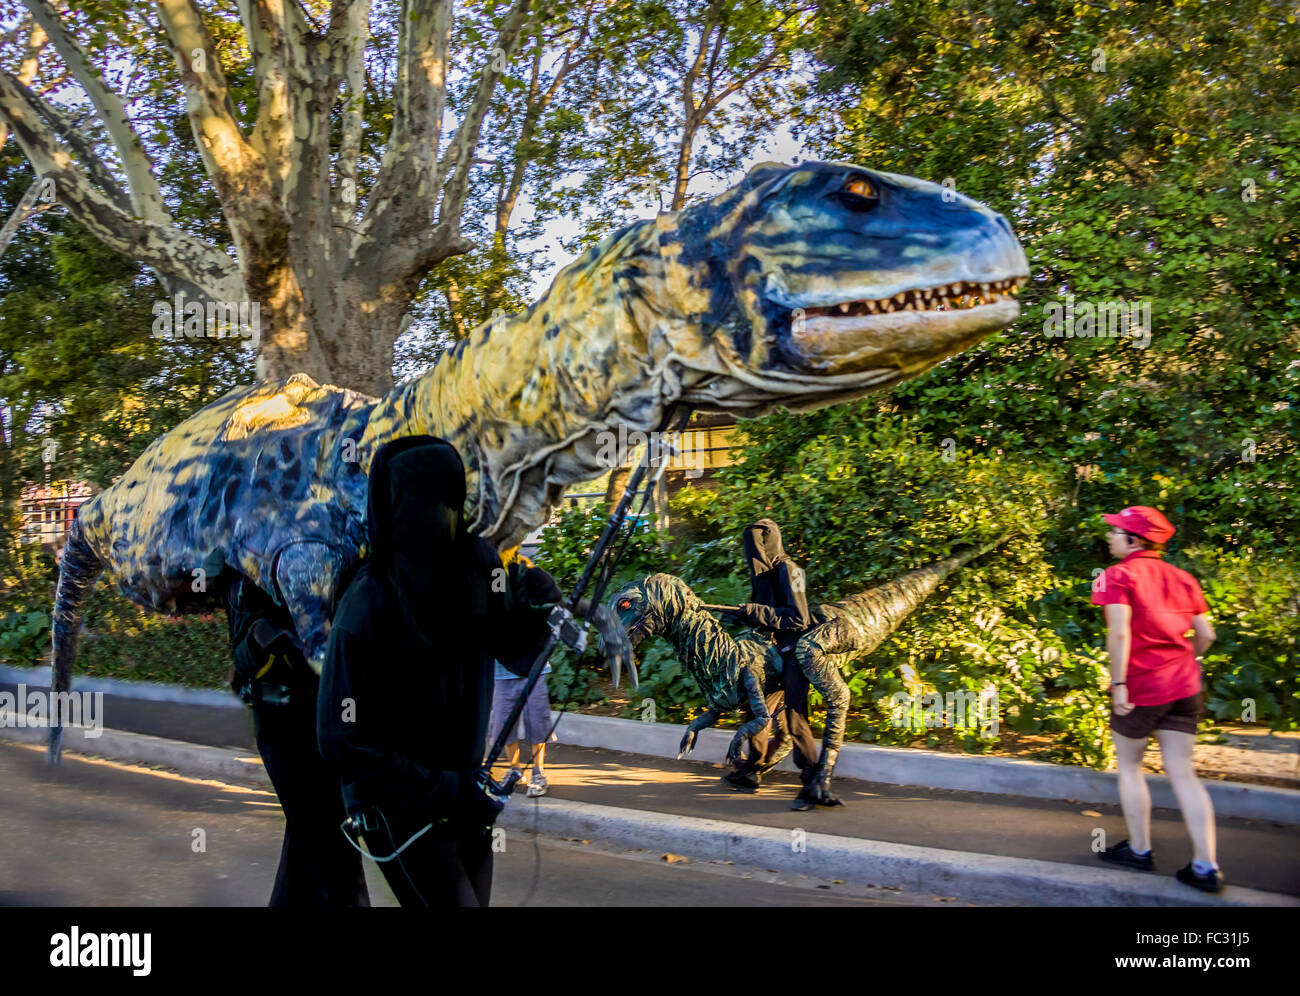 ERTH - Dinosauri dal Gondwana burattini giganti artisti itineranti Foto Stock